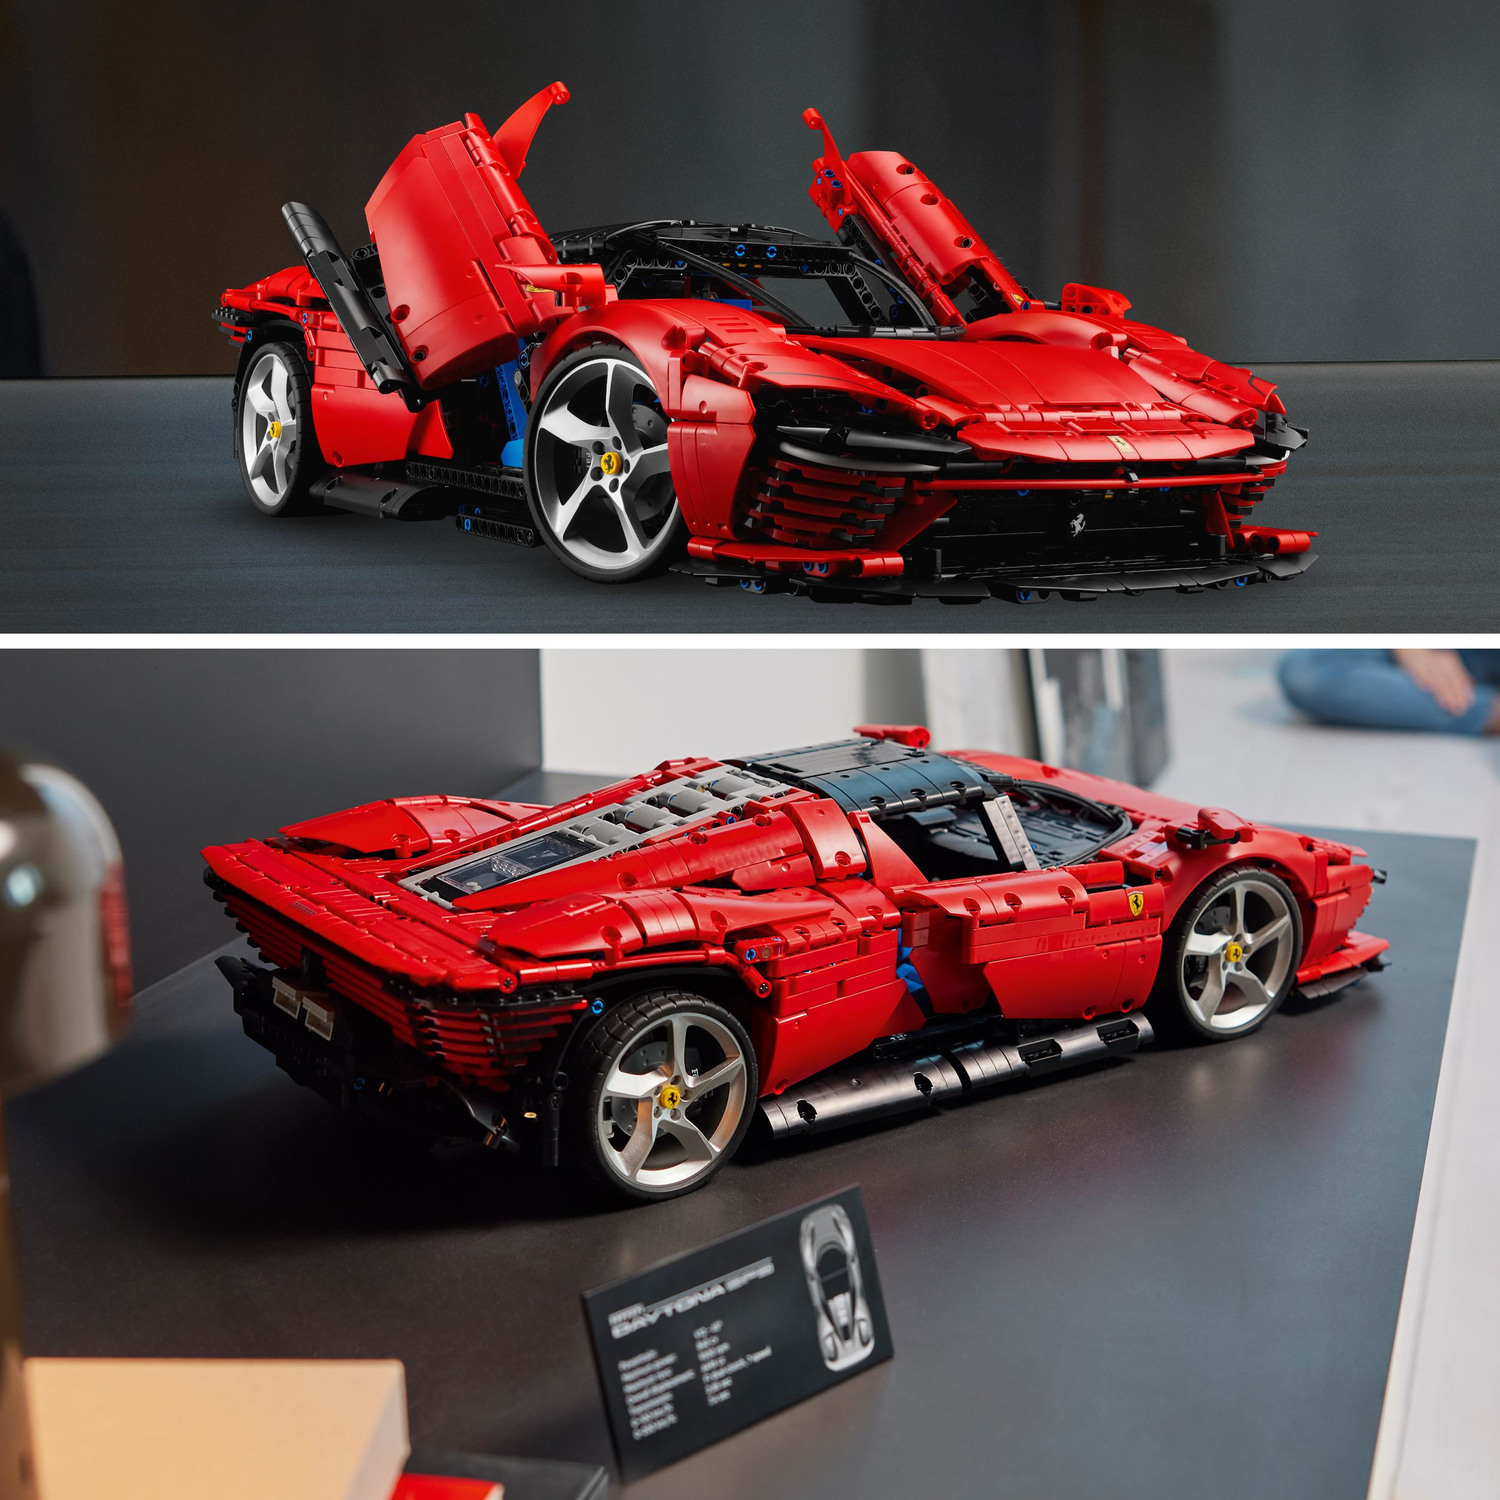 at lege leninismen Dæmon LEGO Technic Ferrari Daytona SP3 Model Car Set – Awesome Toys Gifts